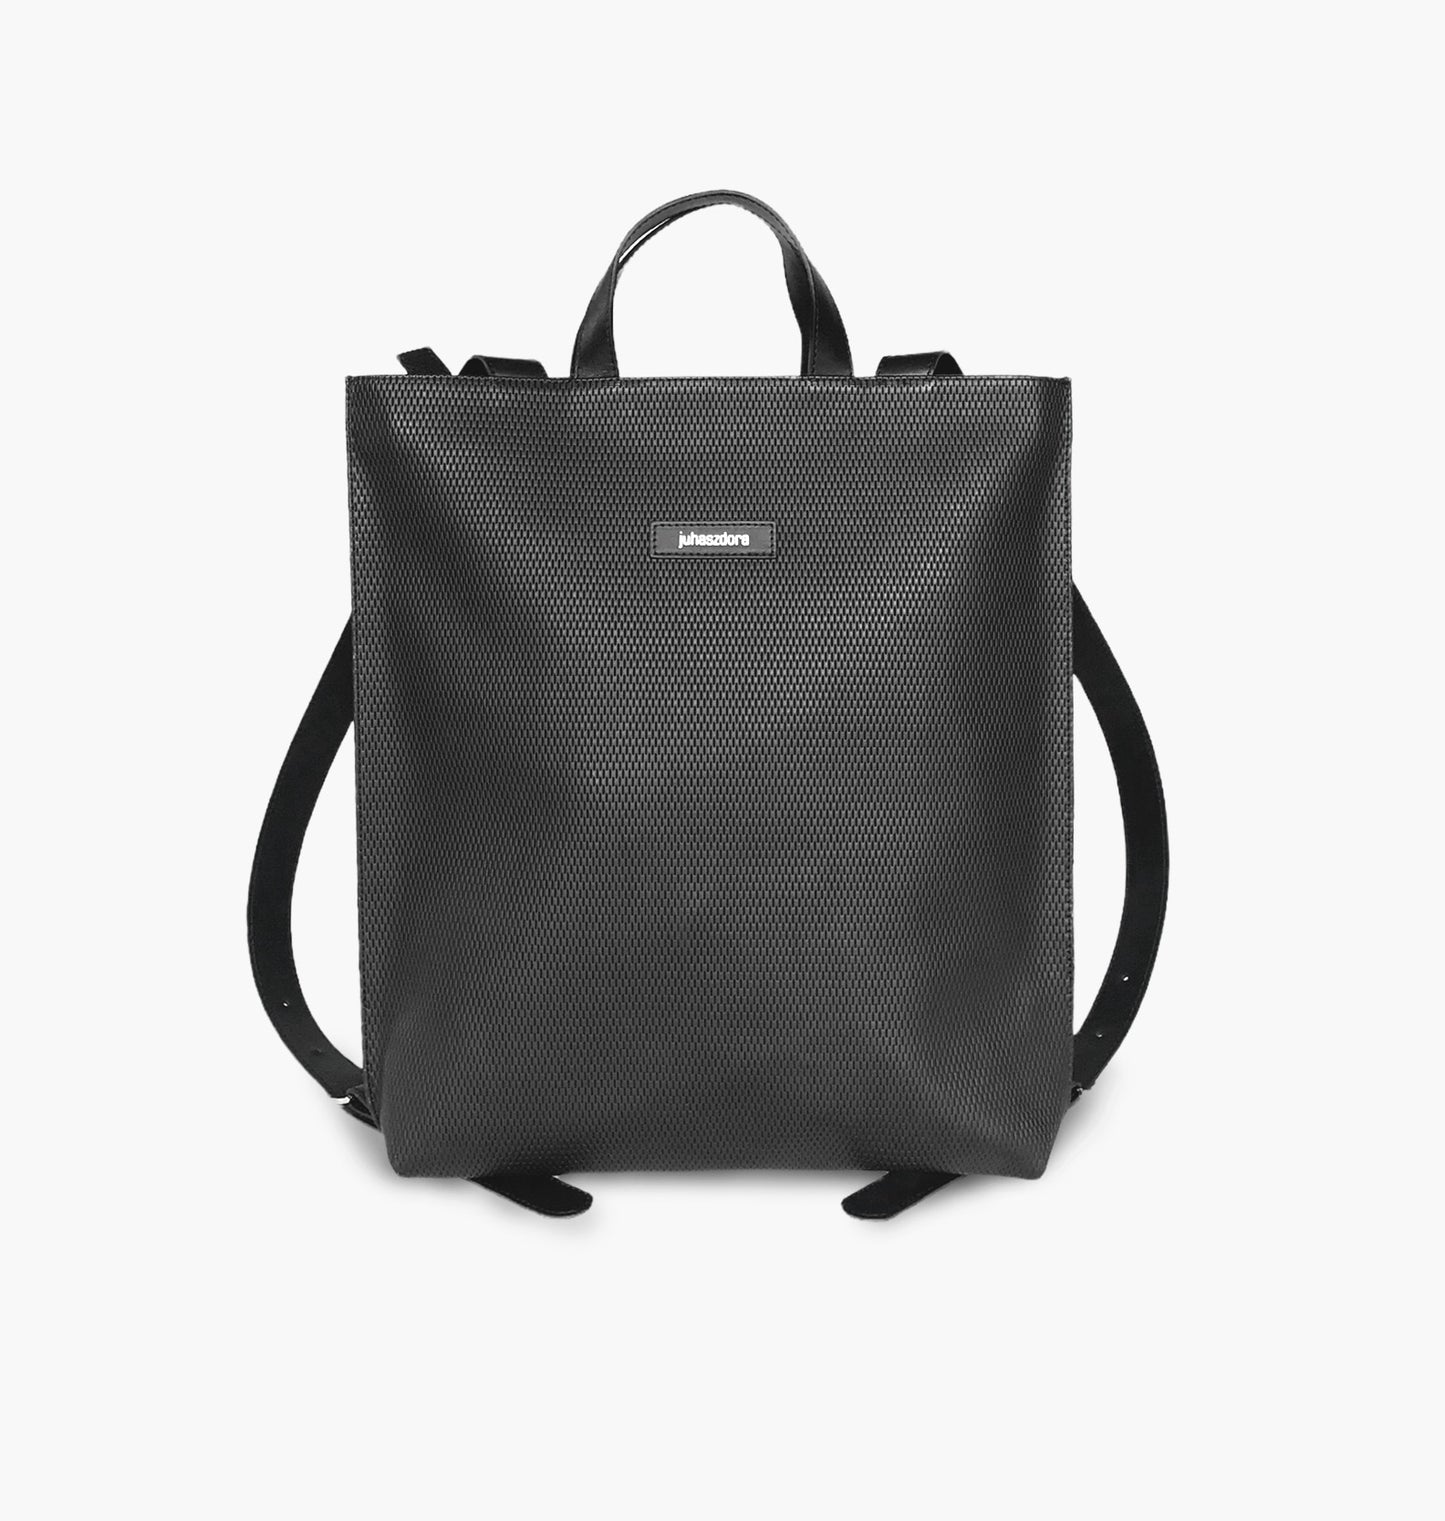 Réka backpack - black with patterned surface